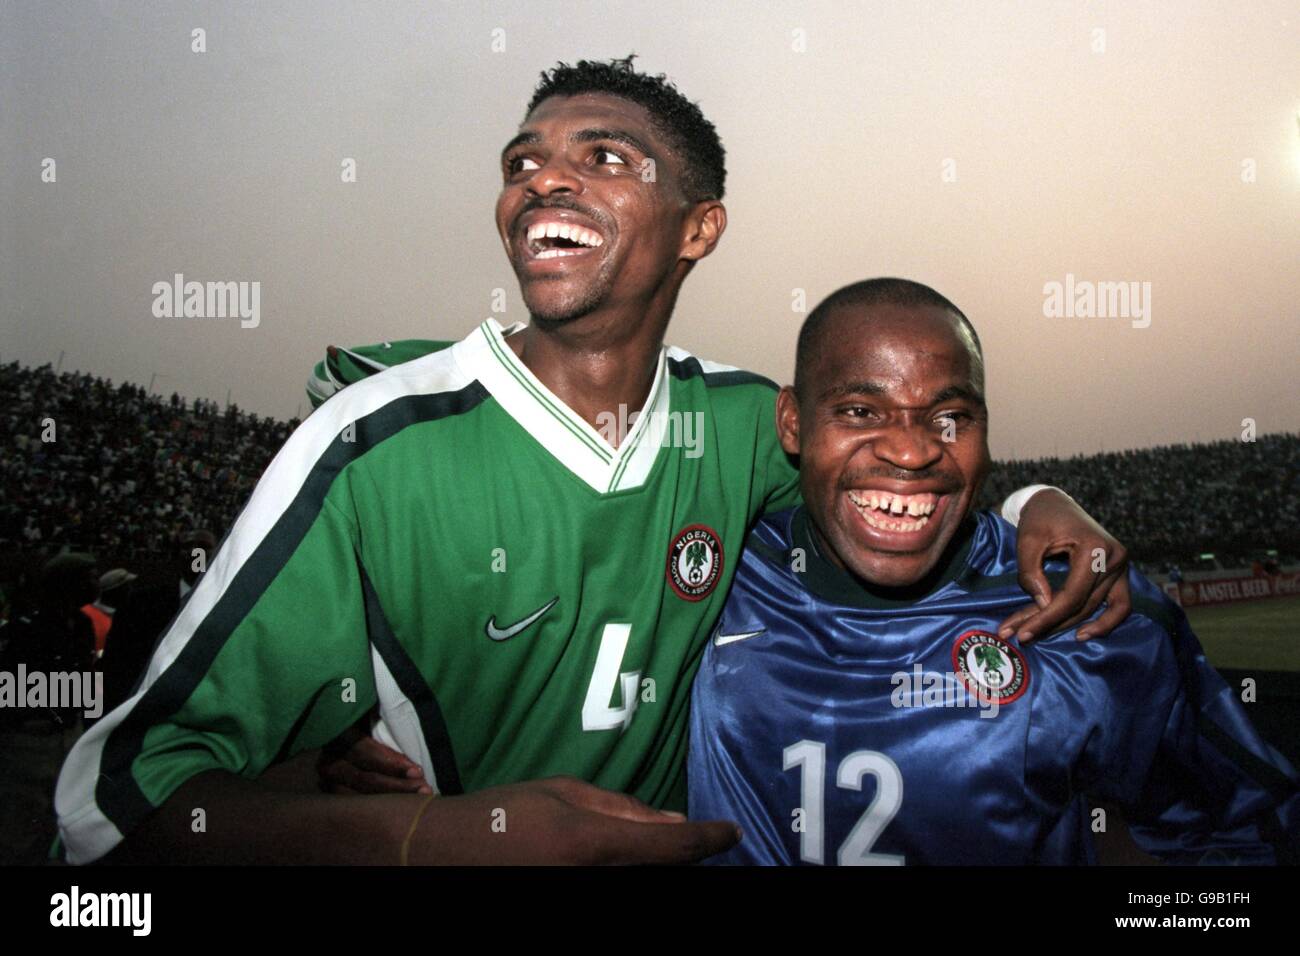 Nigeria's Nwankwo Kanu (l) and Ndubuisi Egbo (r) celebrate reaching the final of the Arican Nations Cup Stock Photo